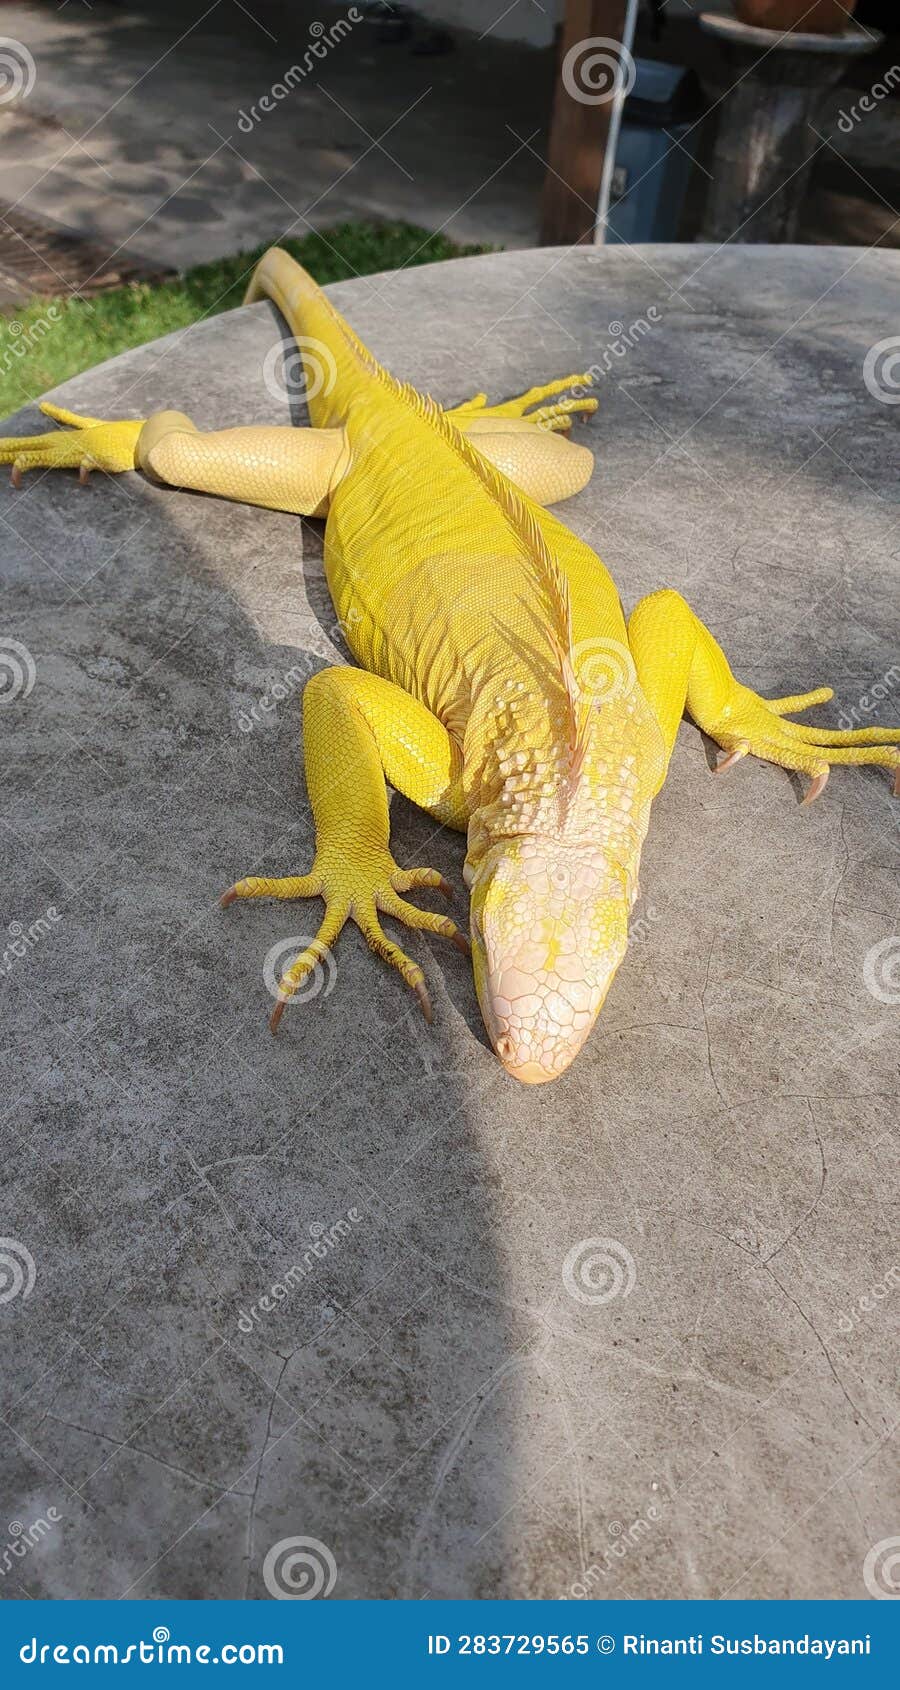 albino iguana named nico basking in the sun